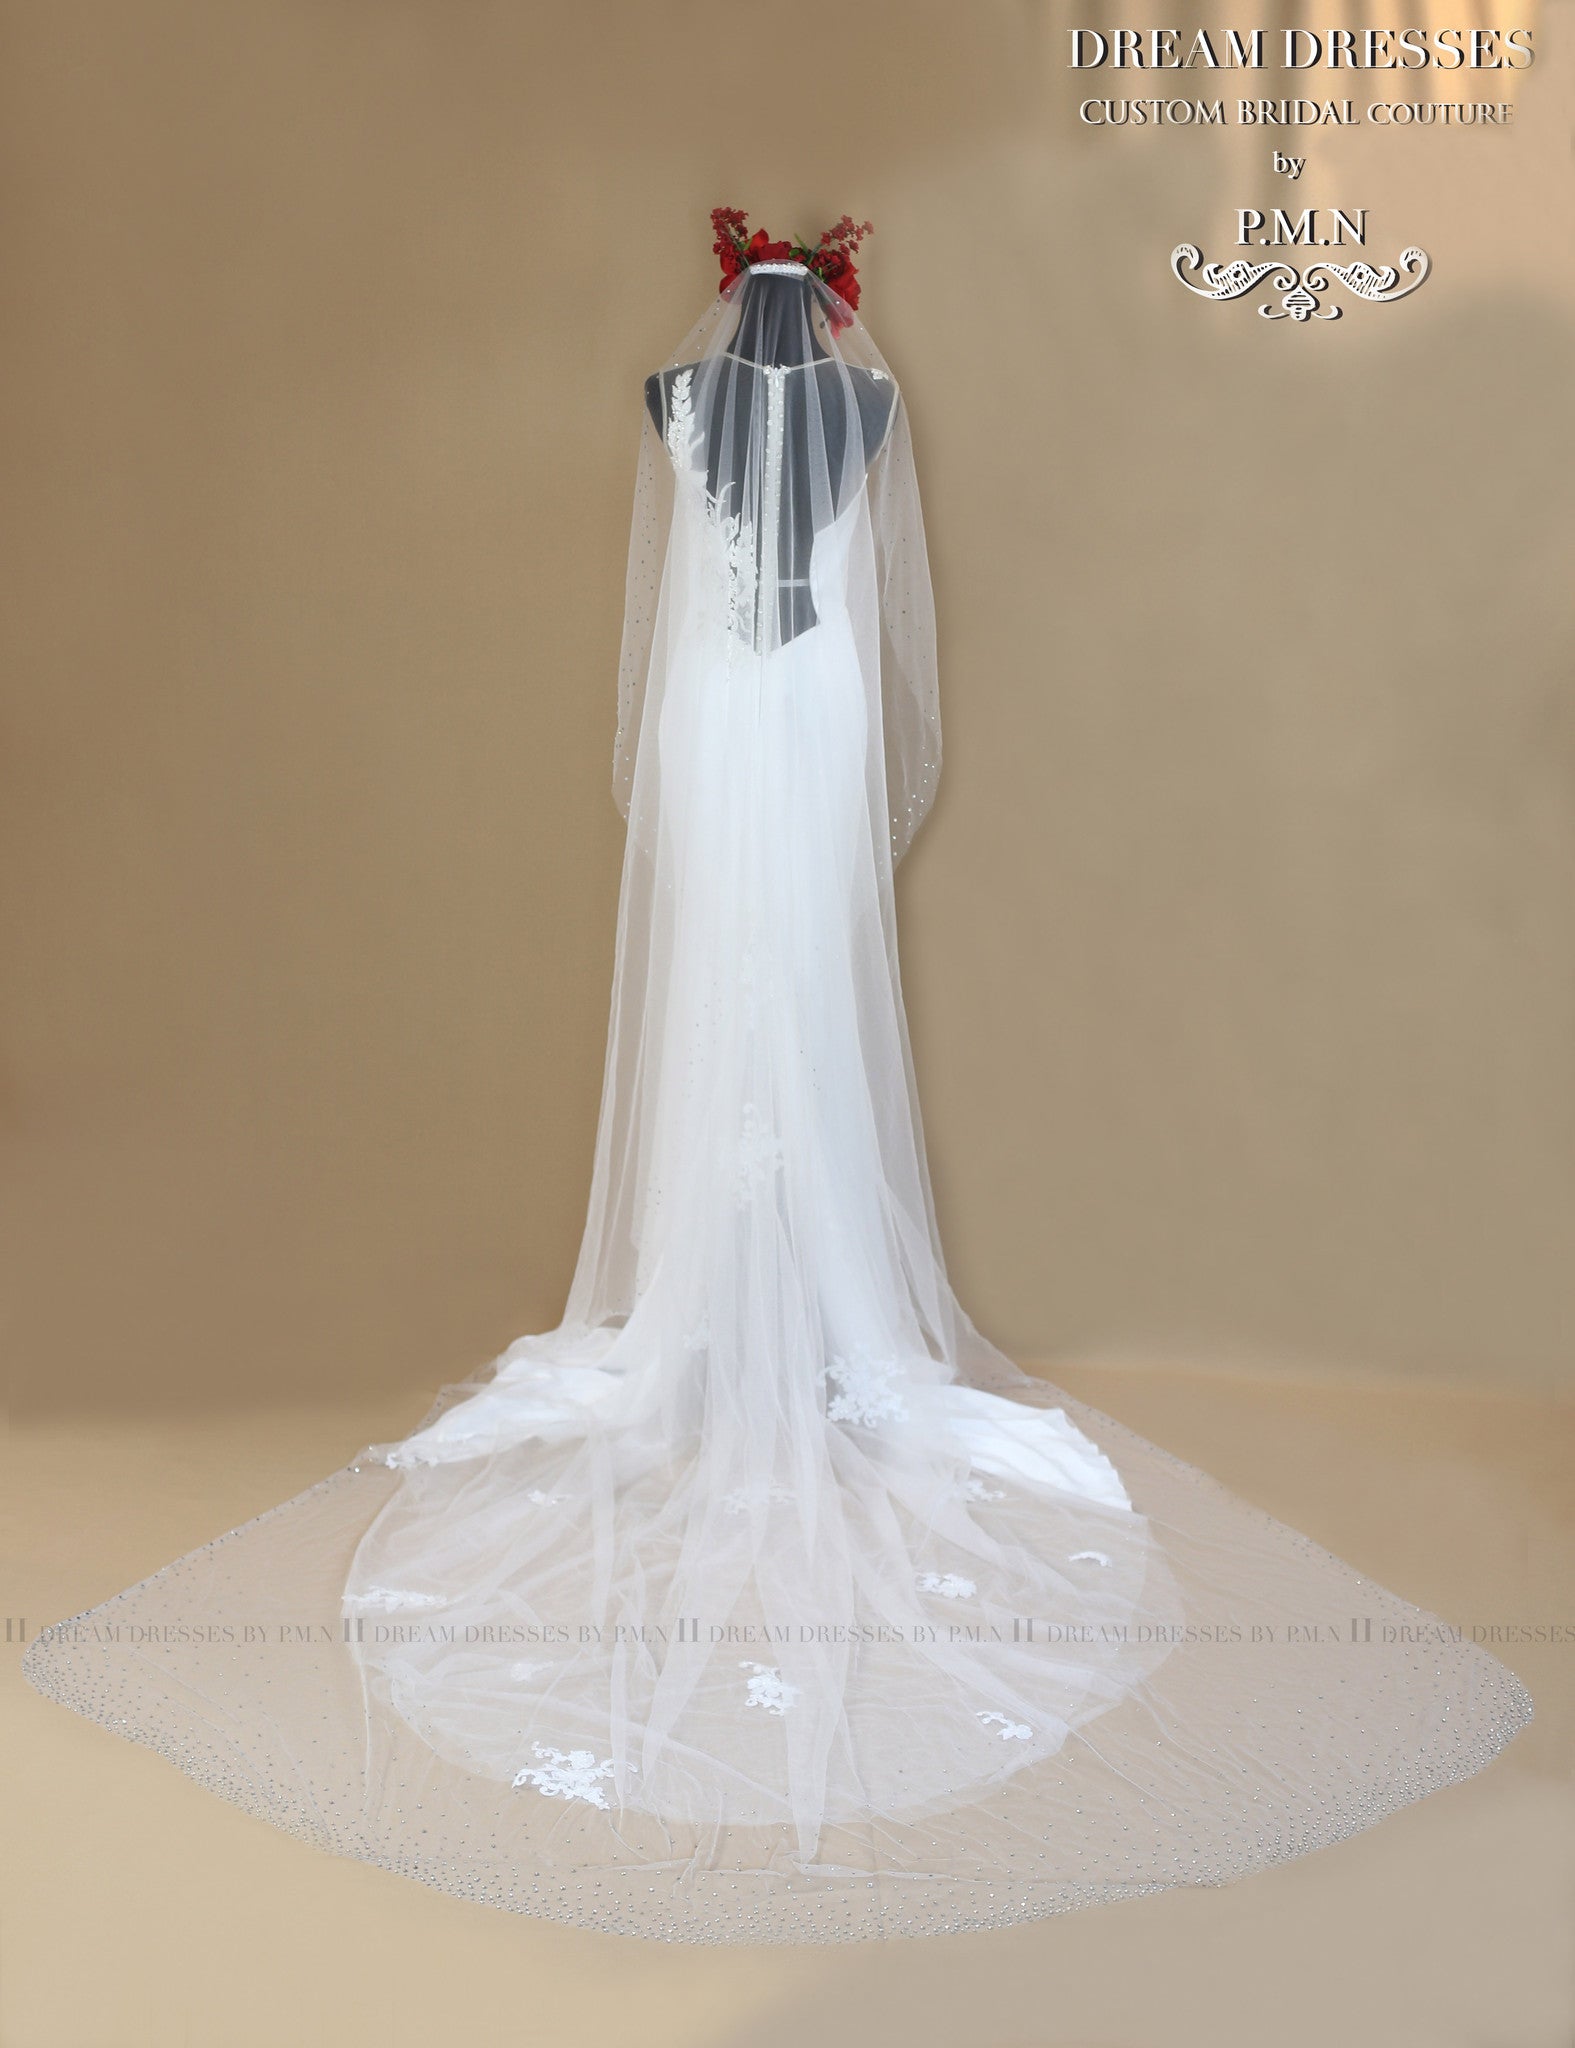 Dream Dresses by P.M.N. Swarovski Crystal Wedding Veil (#Khloe) Elbow / Ivory